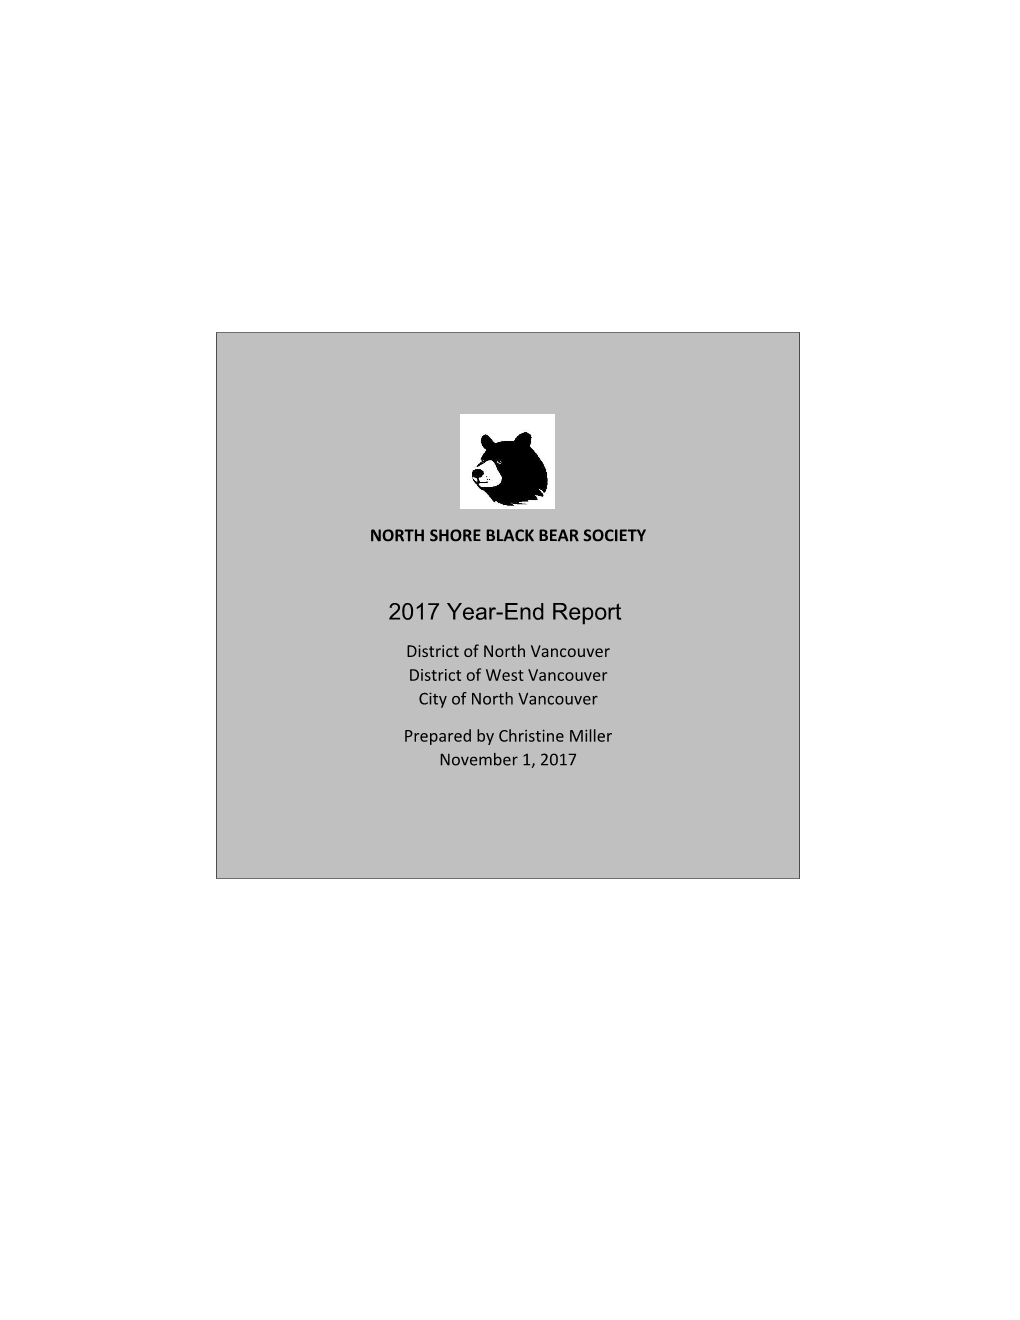 North Shore Black Bear Society Year-End Report 2017